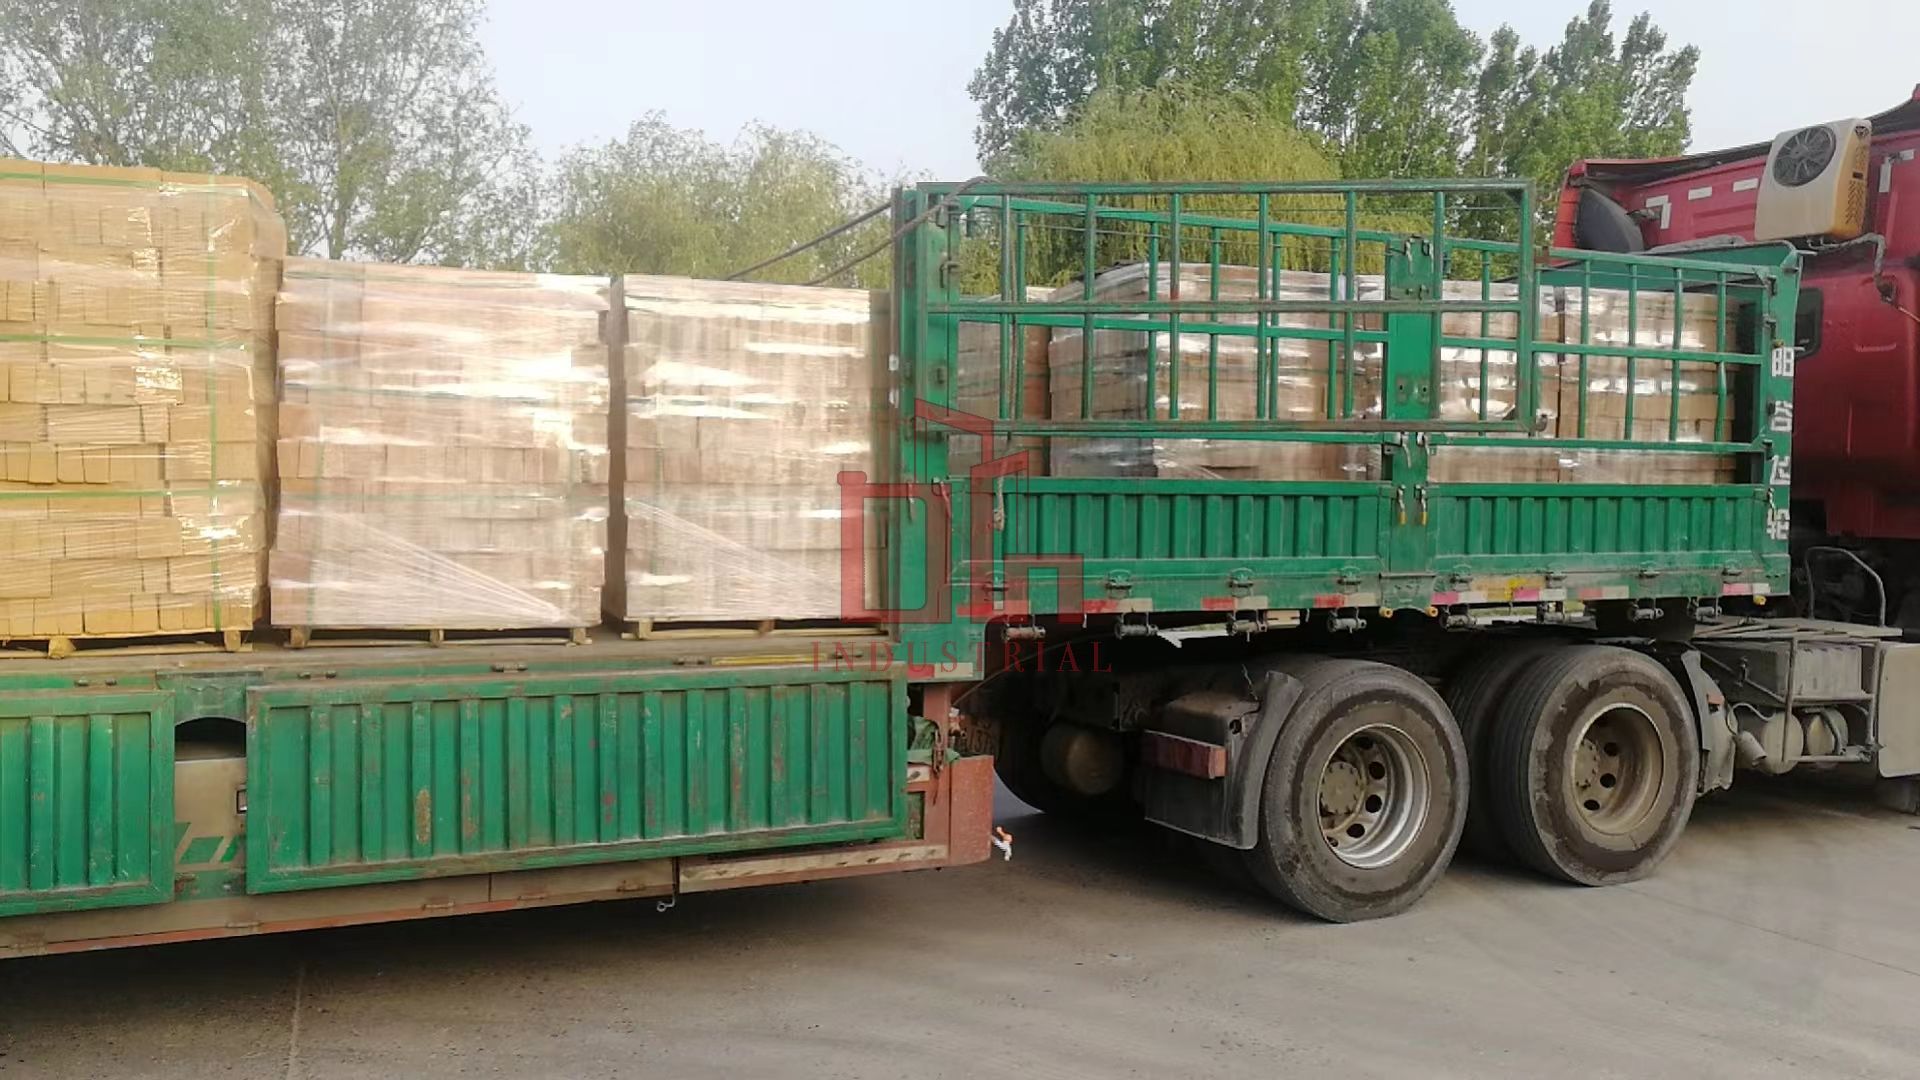 Exported refractory bricks to Vietnam, totaling 125 tons of refractory bricks